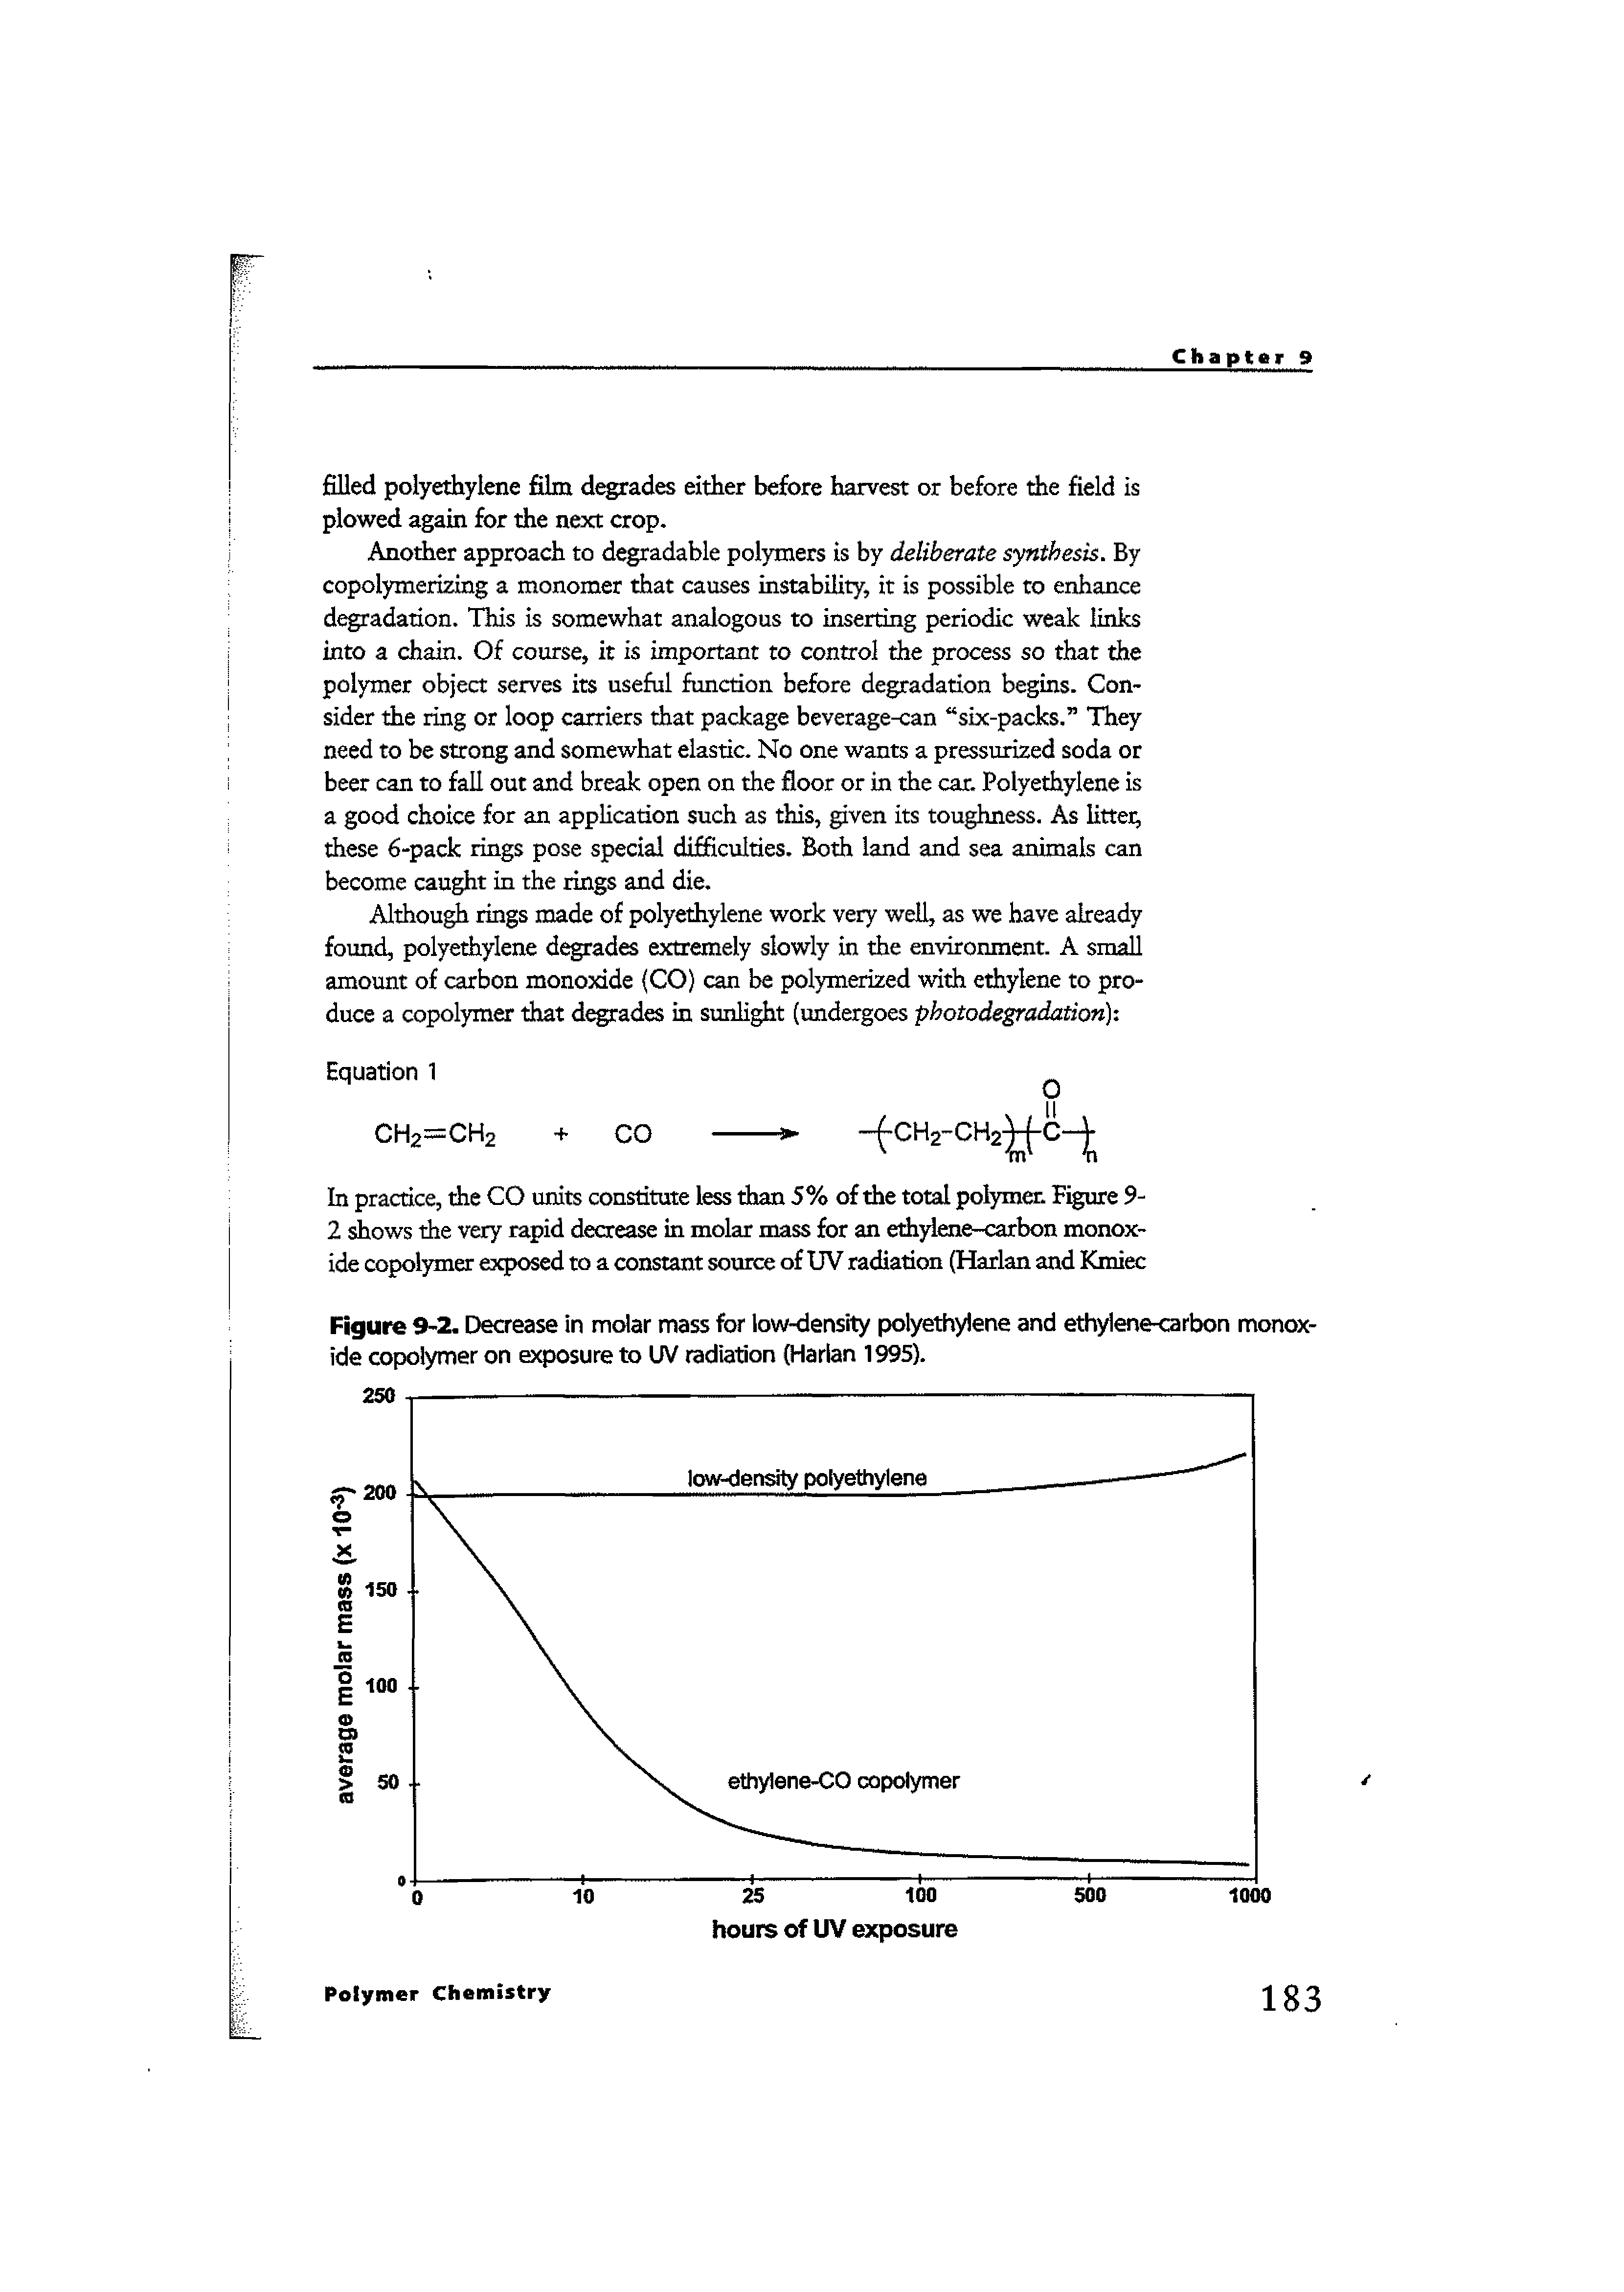 Figure 9-2. Decrease in molar mass for low-density polyethylene and ethylene-carbon monoxide copolymer on exposure to UV radiation (Harlan 1995).